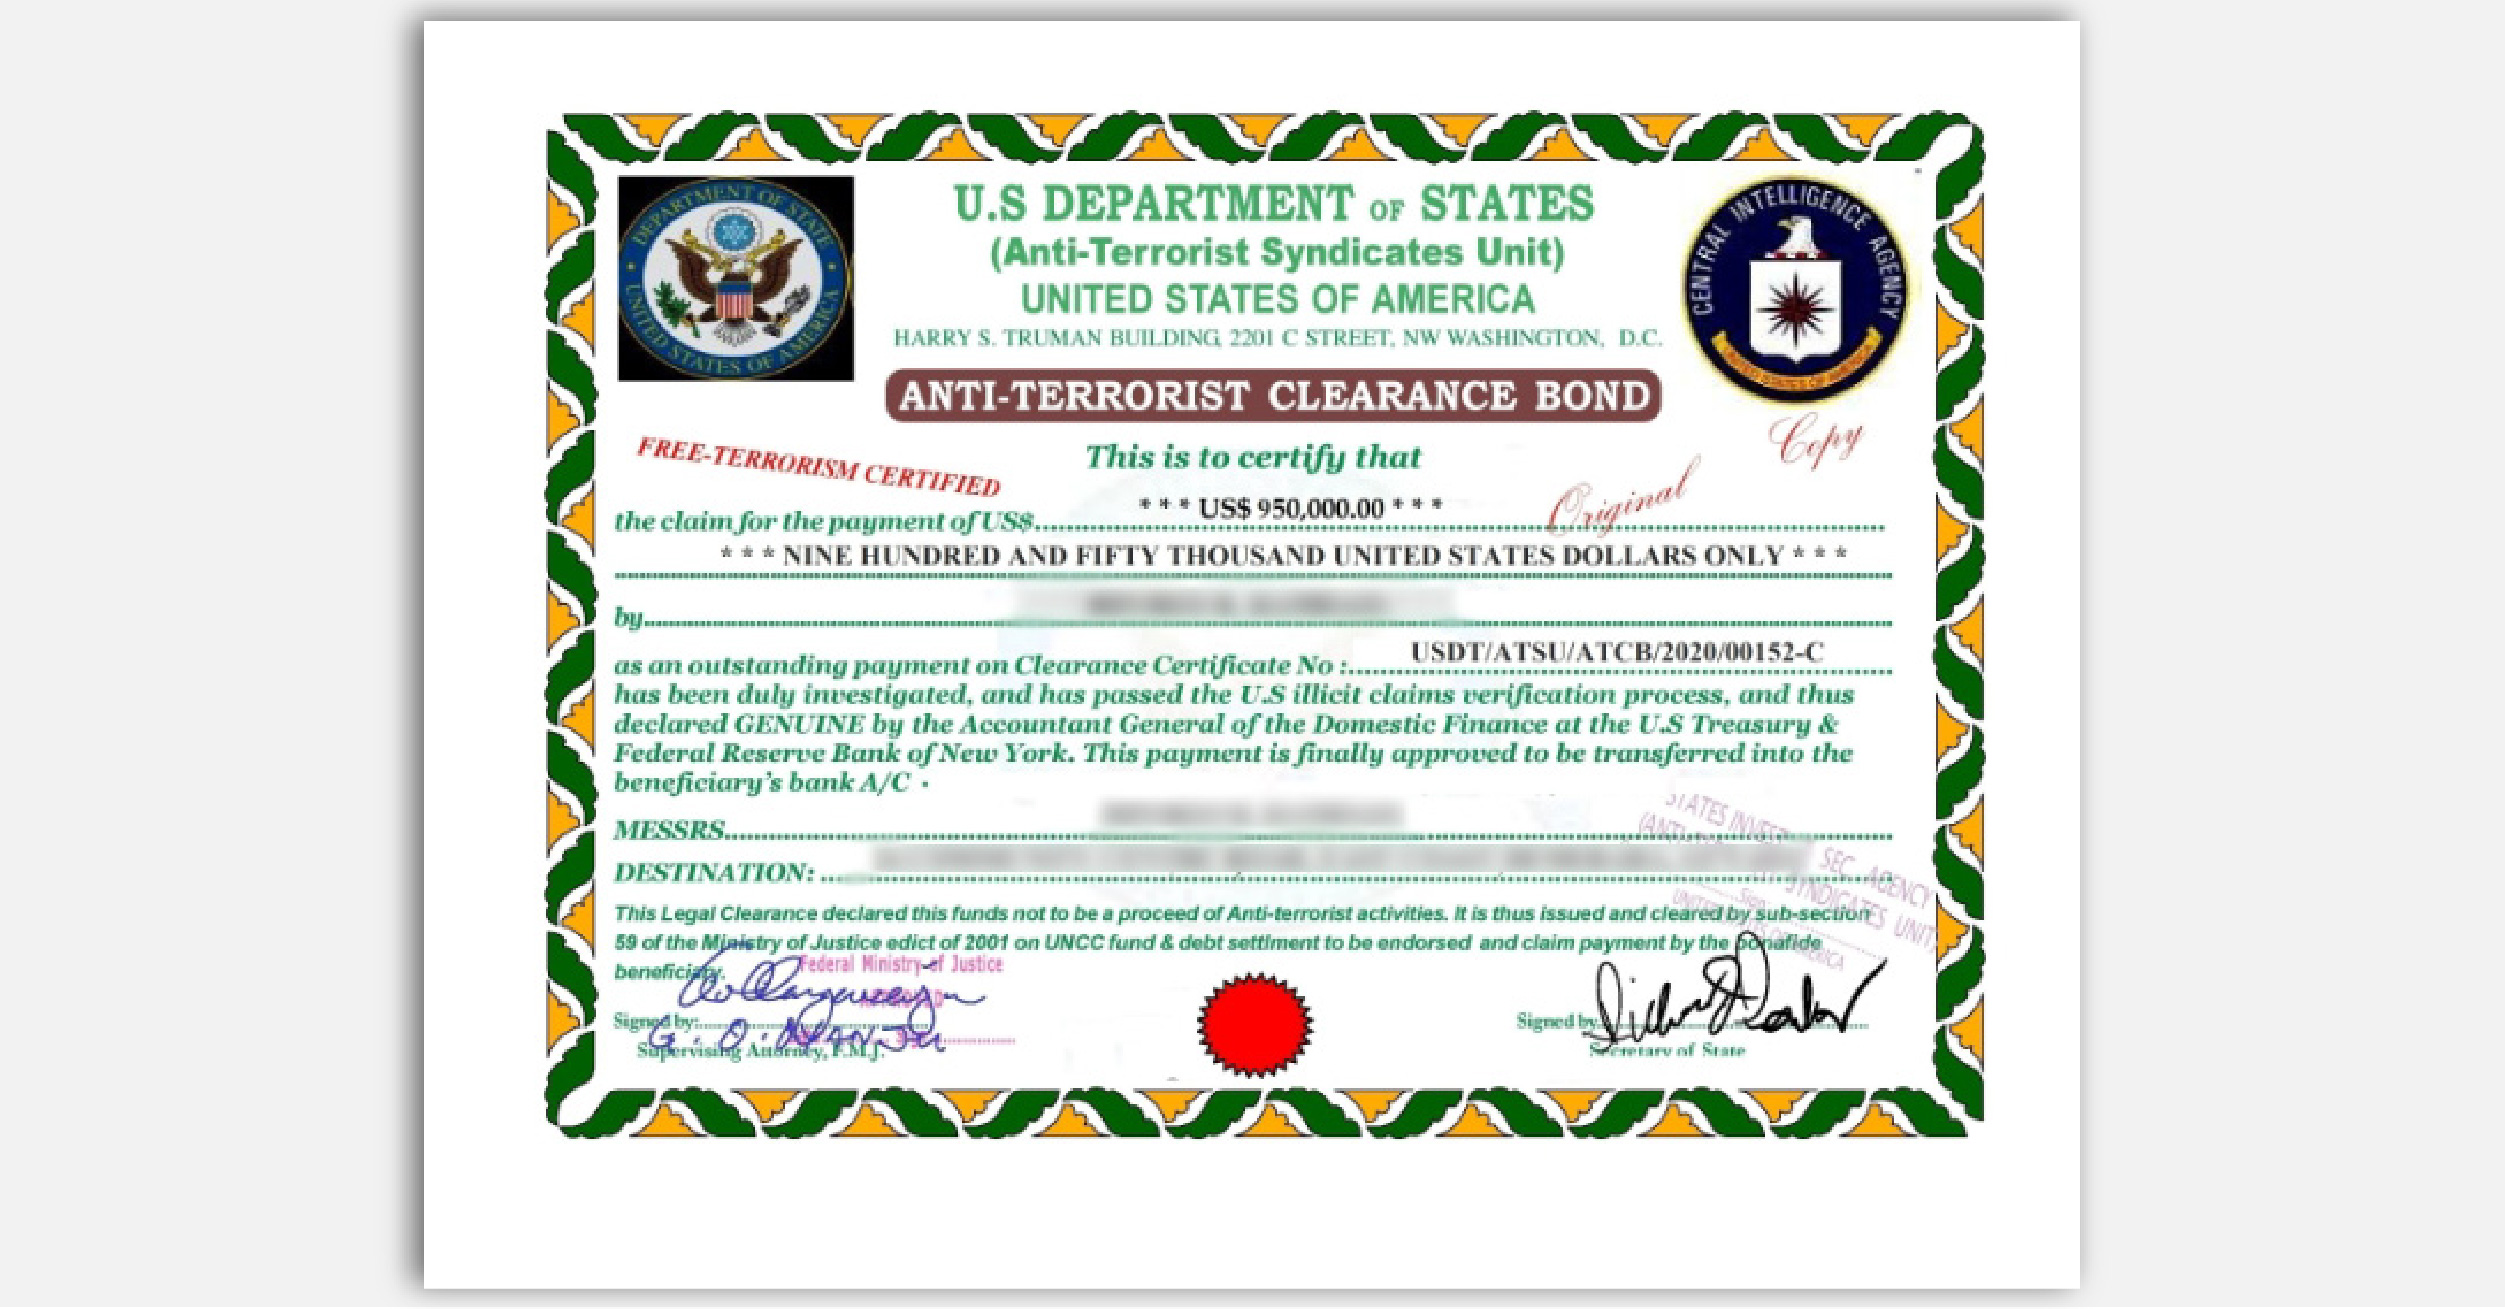 FTC impersonator scam fake State Dept. certificate